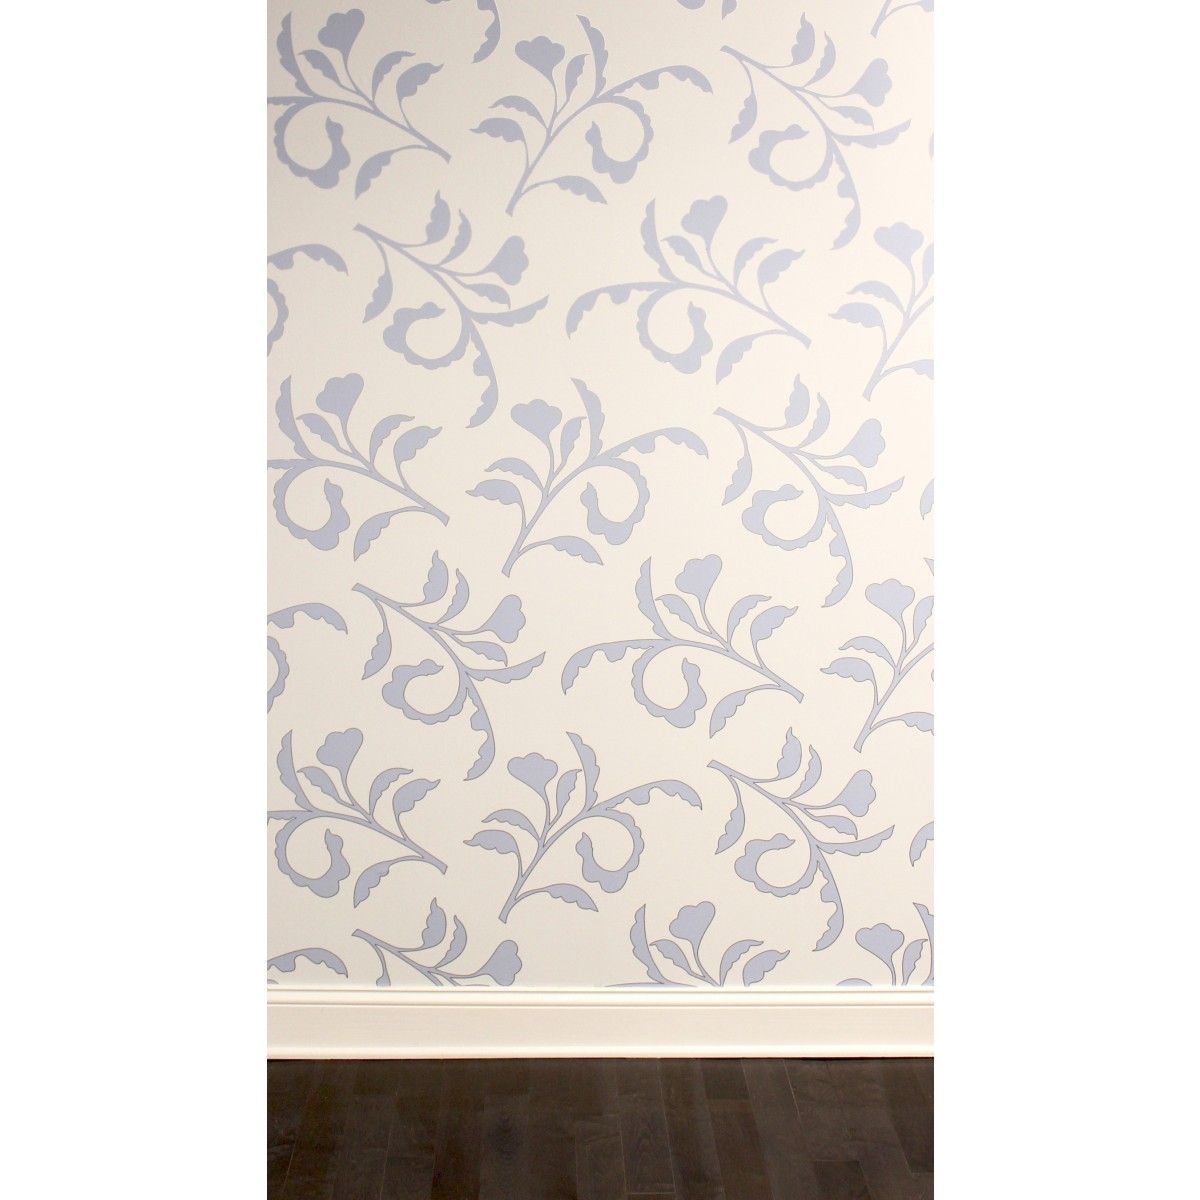 Big Branch Light Blue Ivory CR444 Self-Adhesive Wallpaper